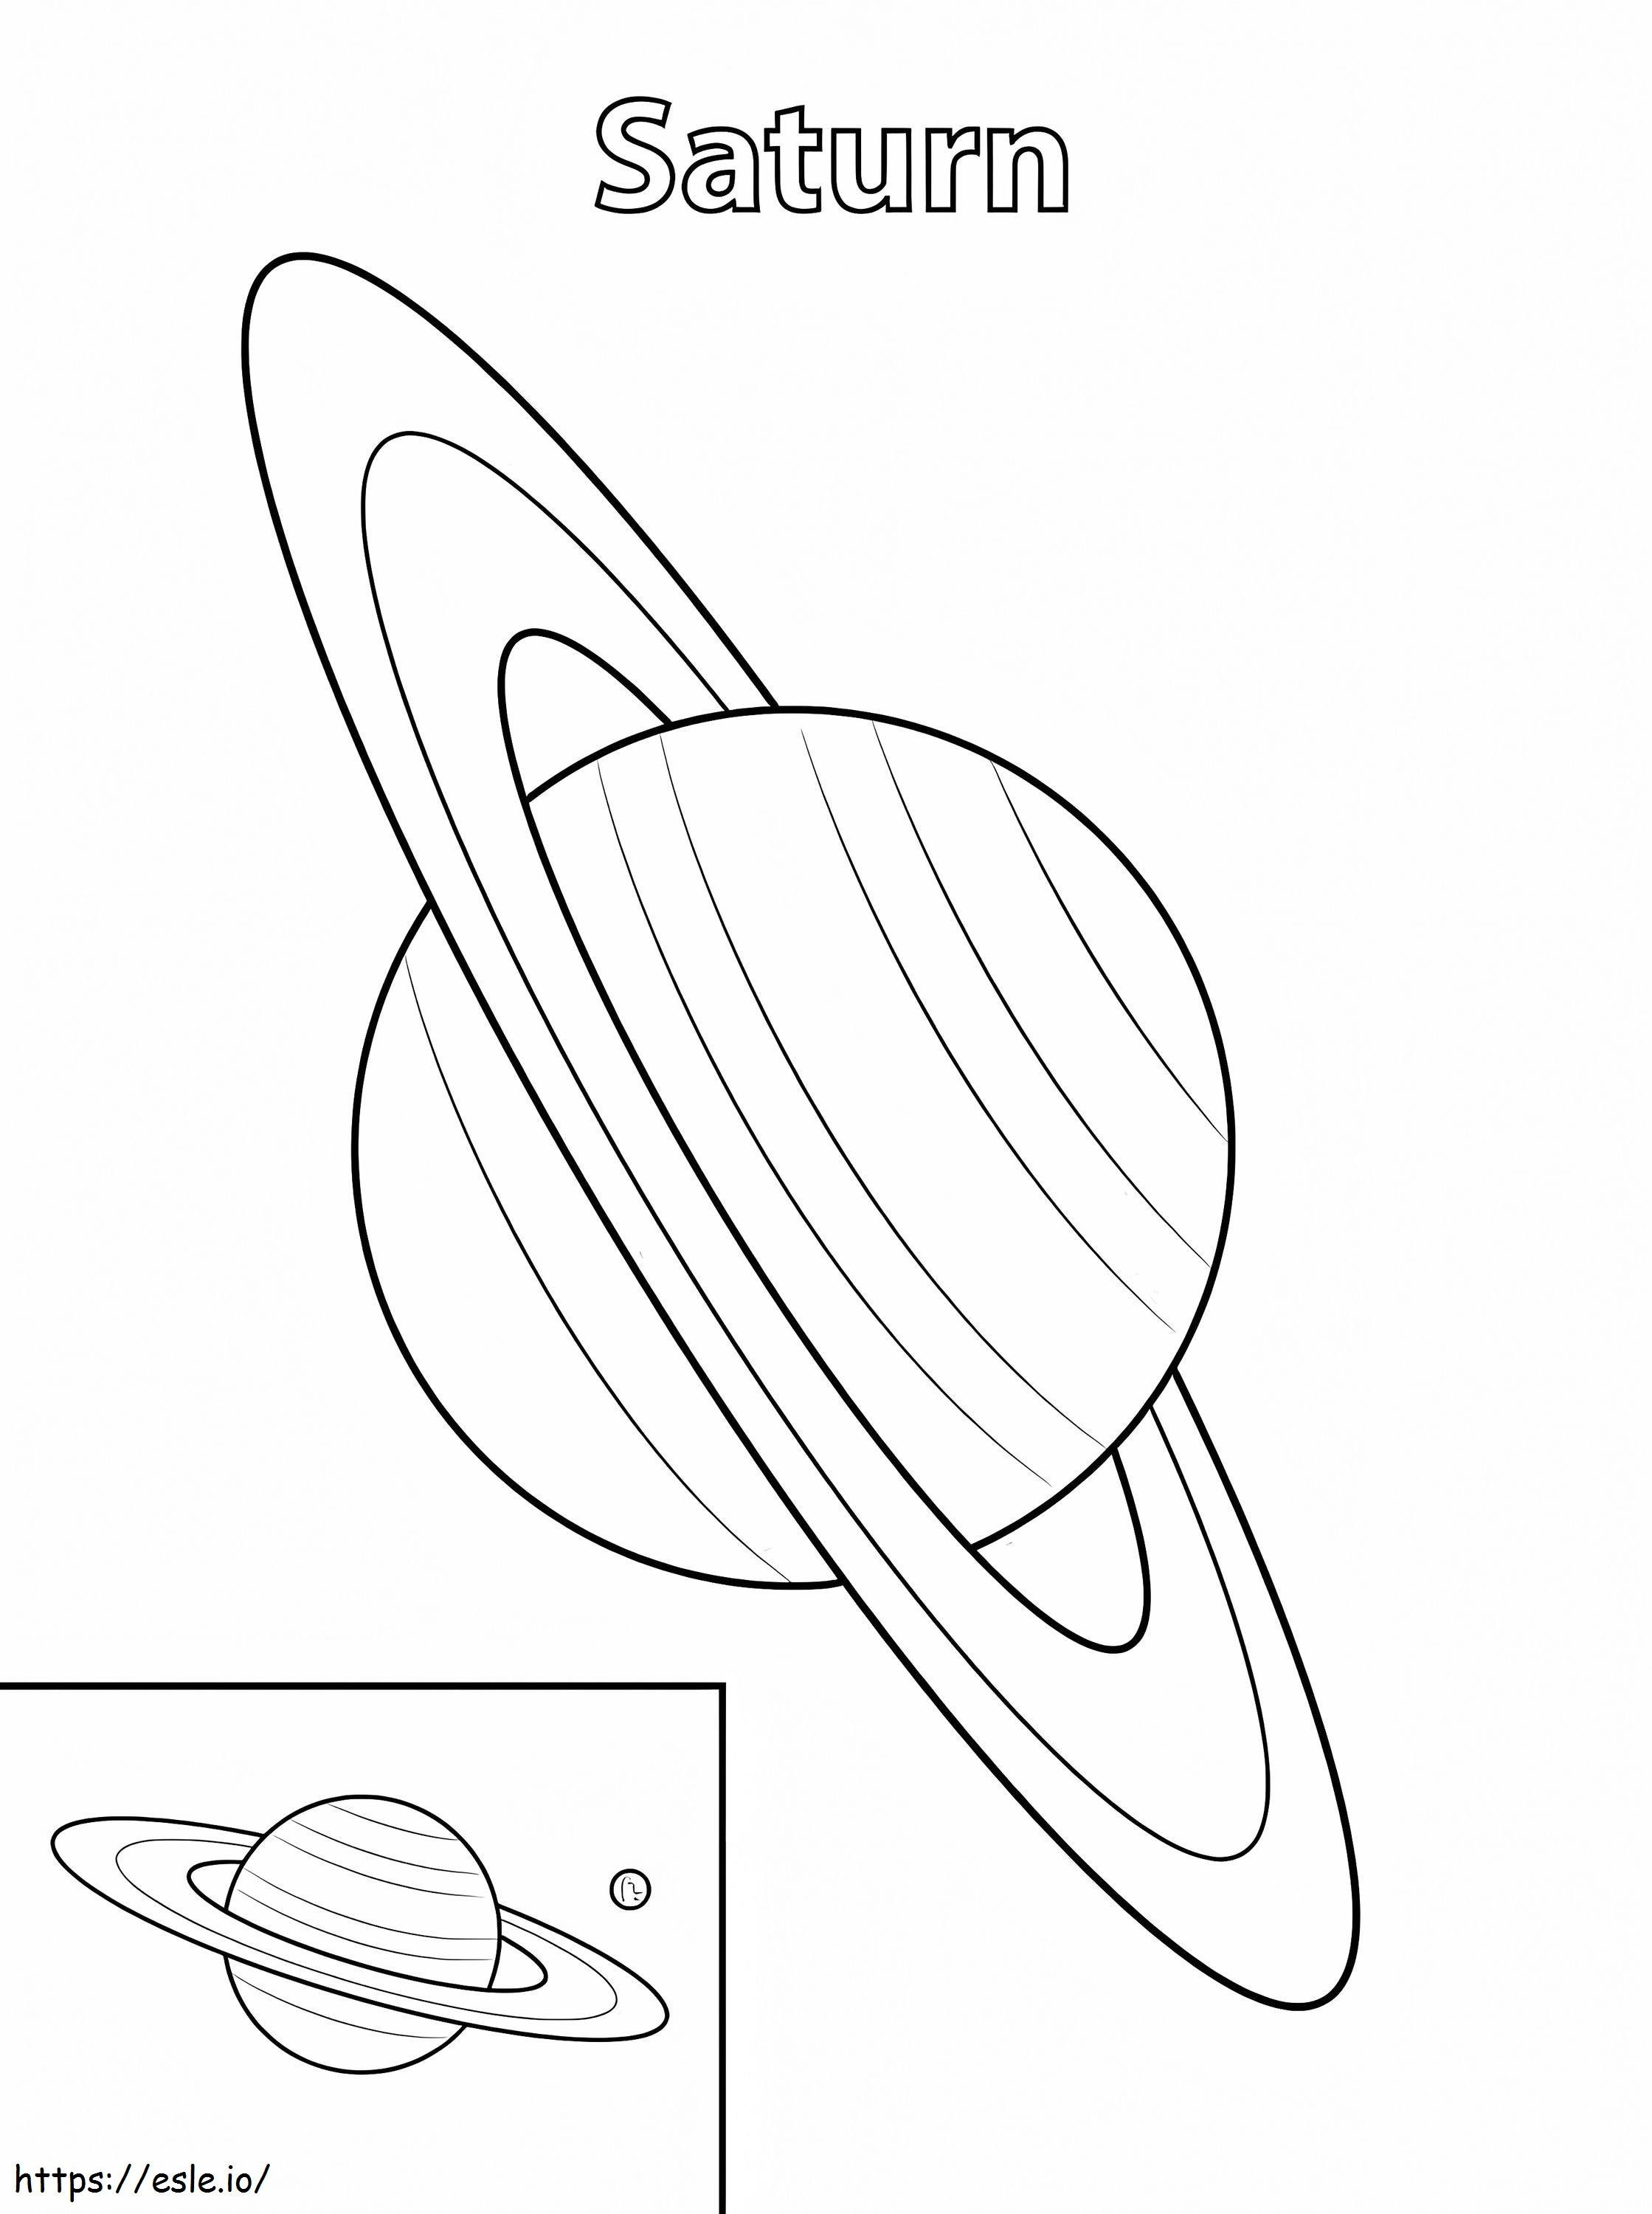 Planeta Saturn de colorat